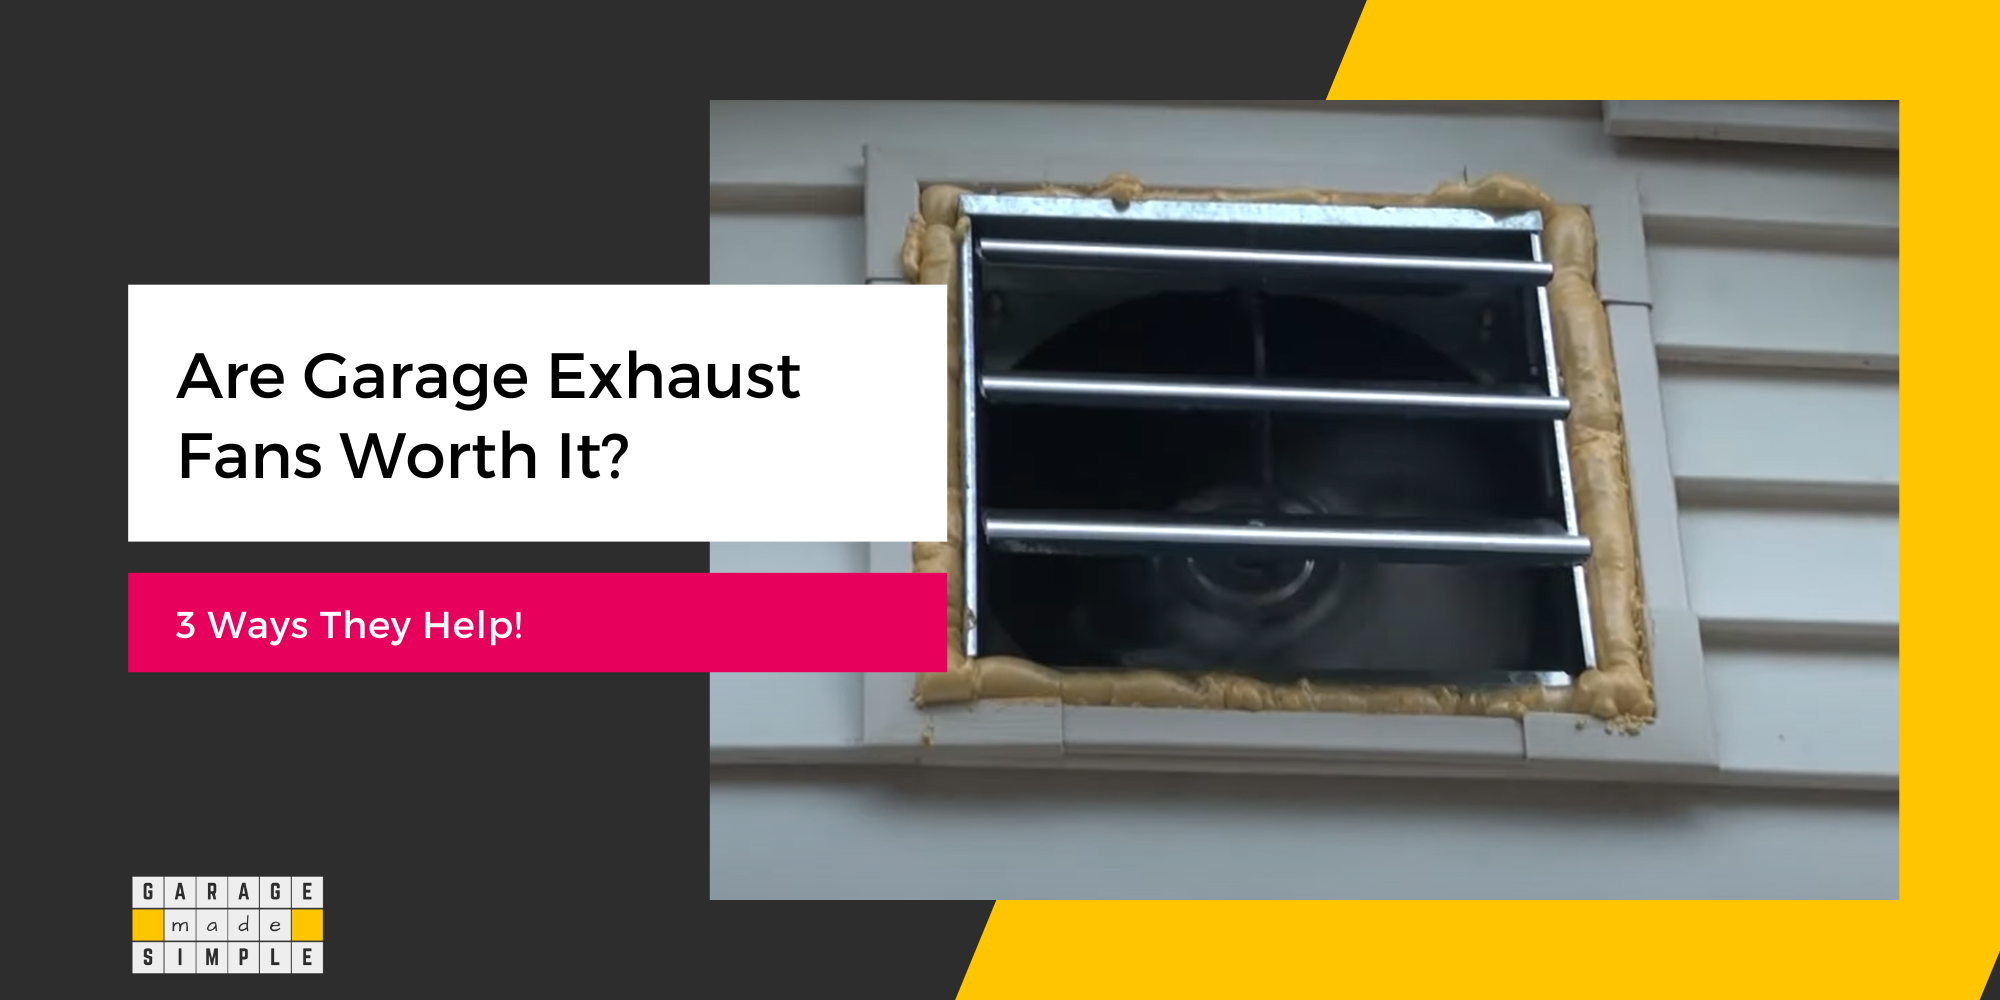 Are Garage Exhaust Fans Worth It?